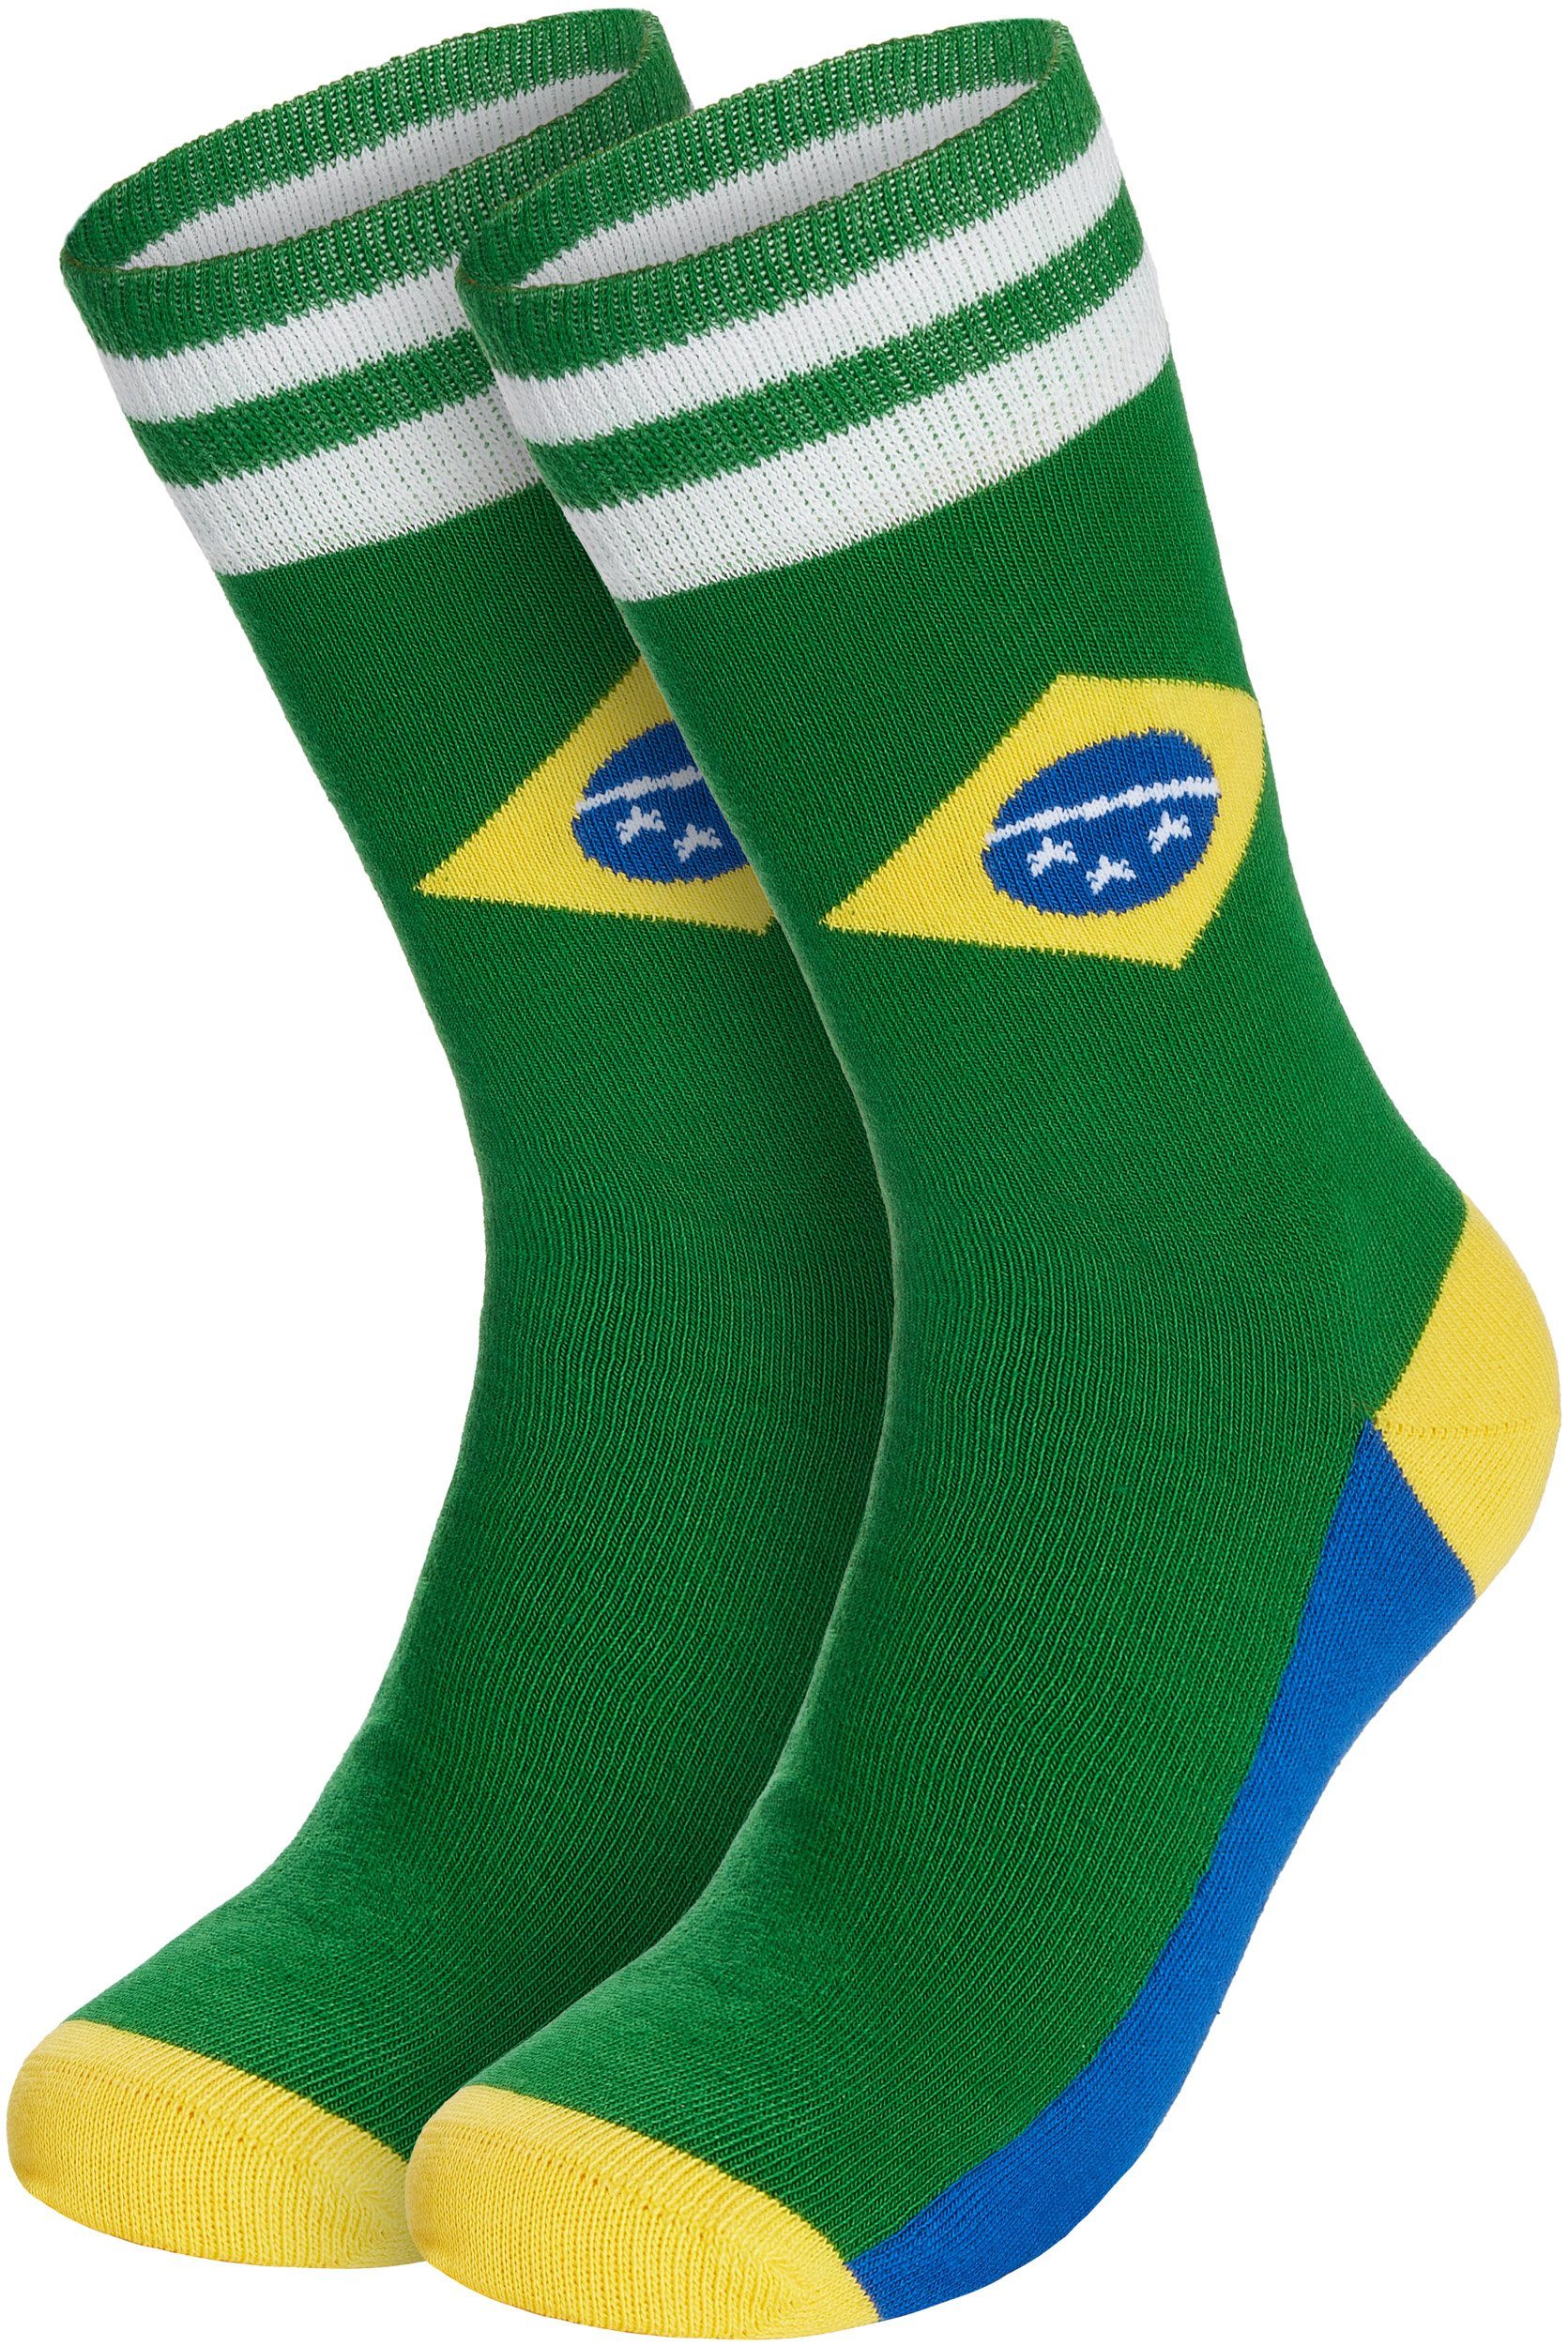 BRUBAKER (One Argentinien, Flagge/Fahne Lustiges Socken USA für Weltmeisterschaft Fußball-Fans Fußballer - Geschenk Socken Herren Fan Motiv - Lustig - - Size Crew-Socken Nationalflagge 1-Paar) Brasilien Männer Socken